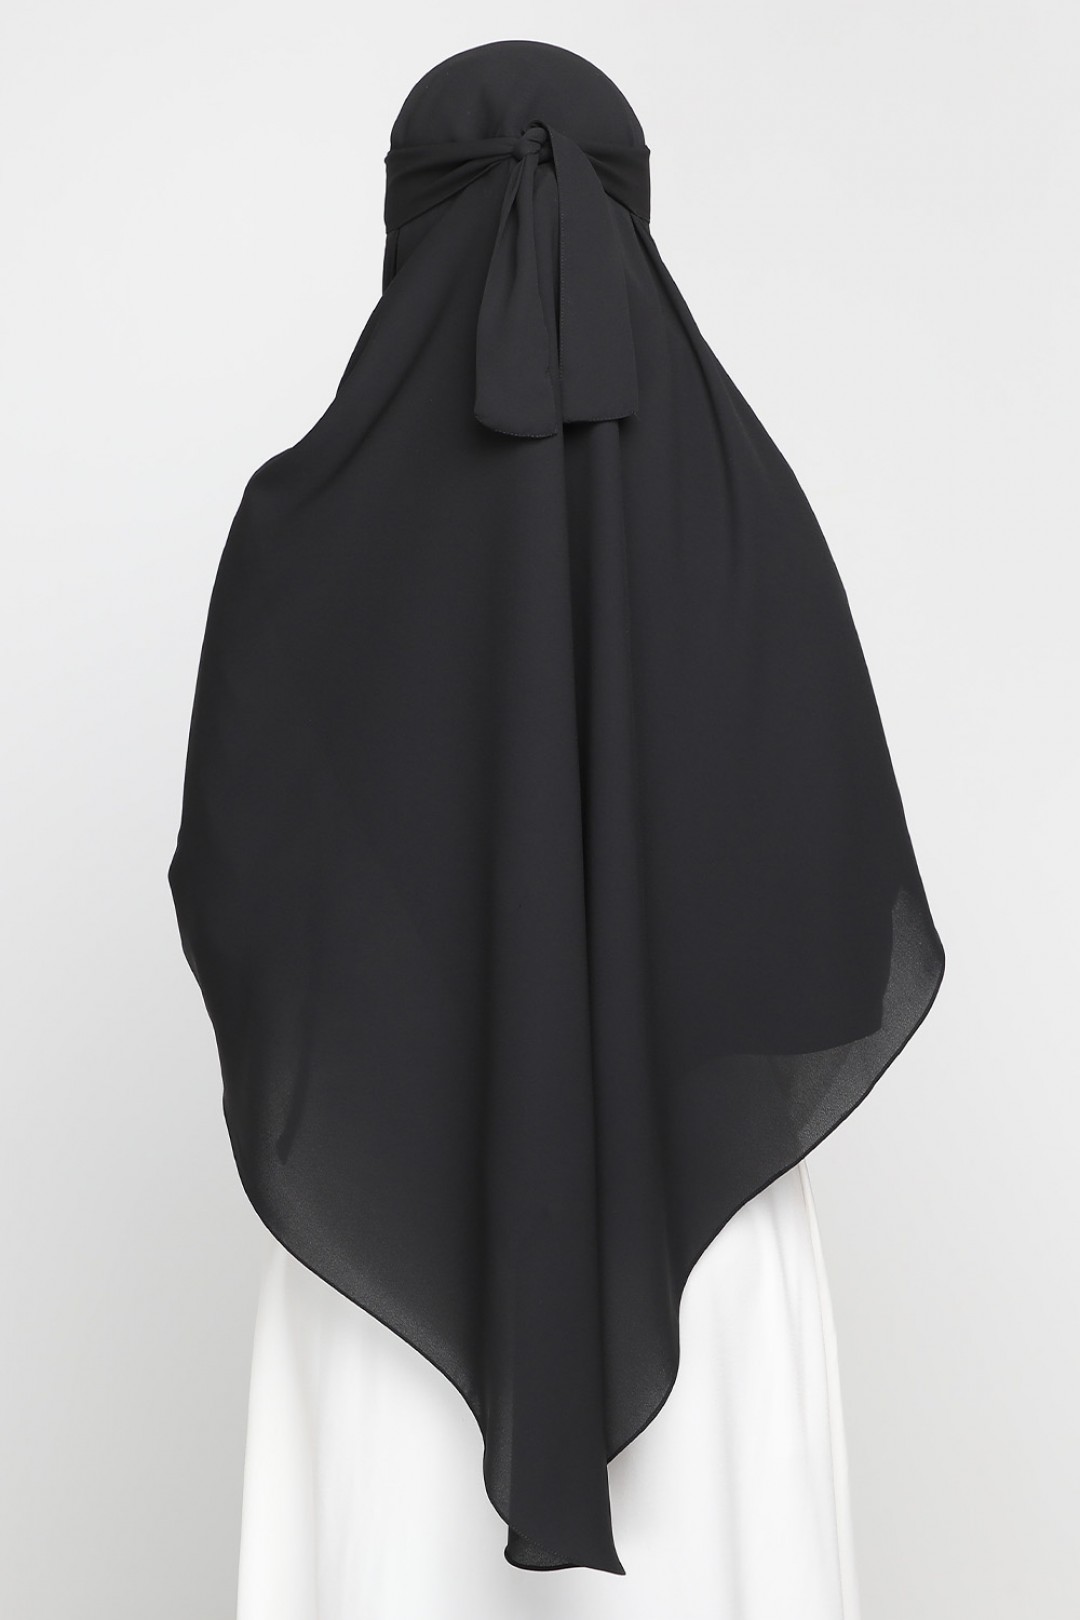 Niqab Dark Black